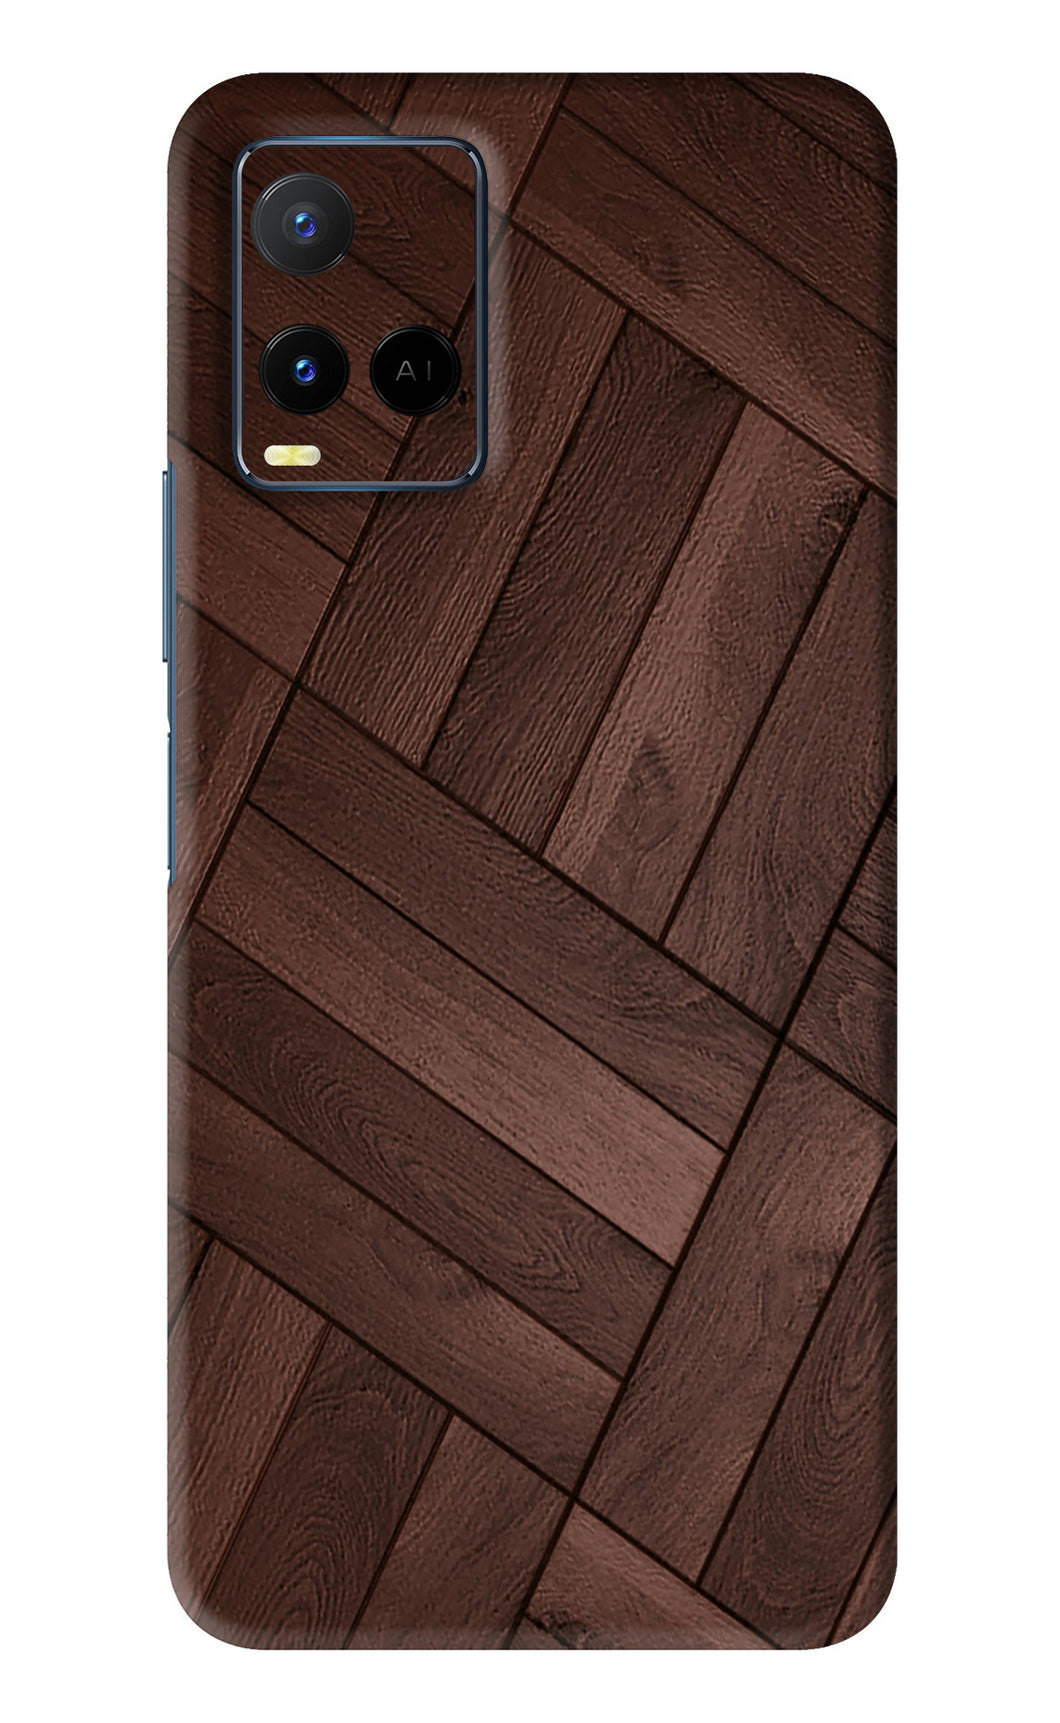 Wooden Texture Design Vivo Y21 Back Skin Wrap